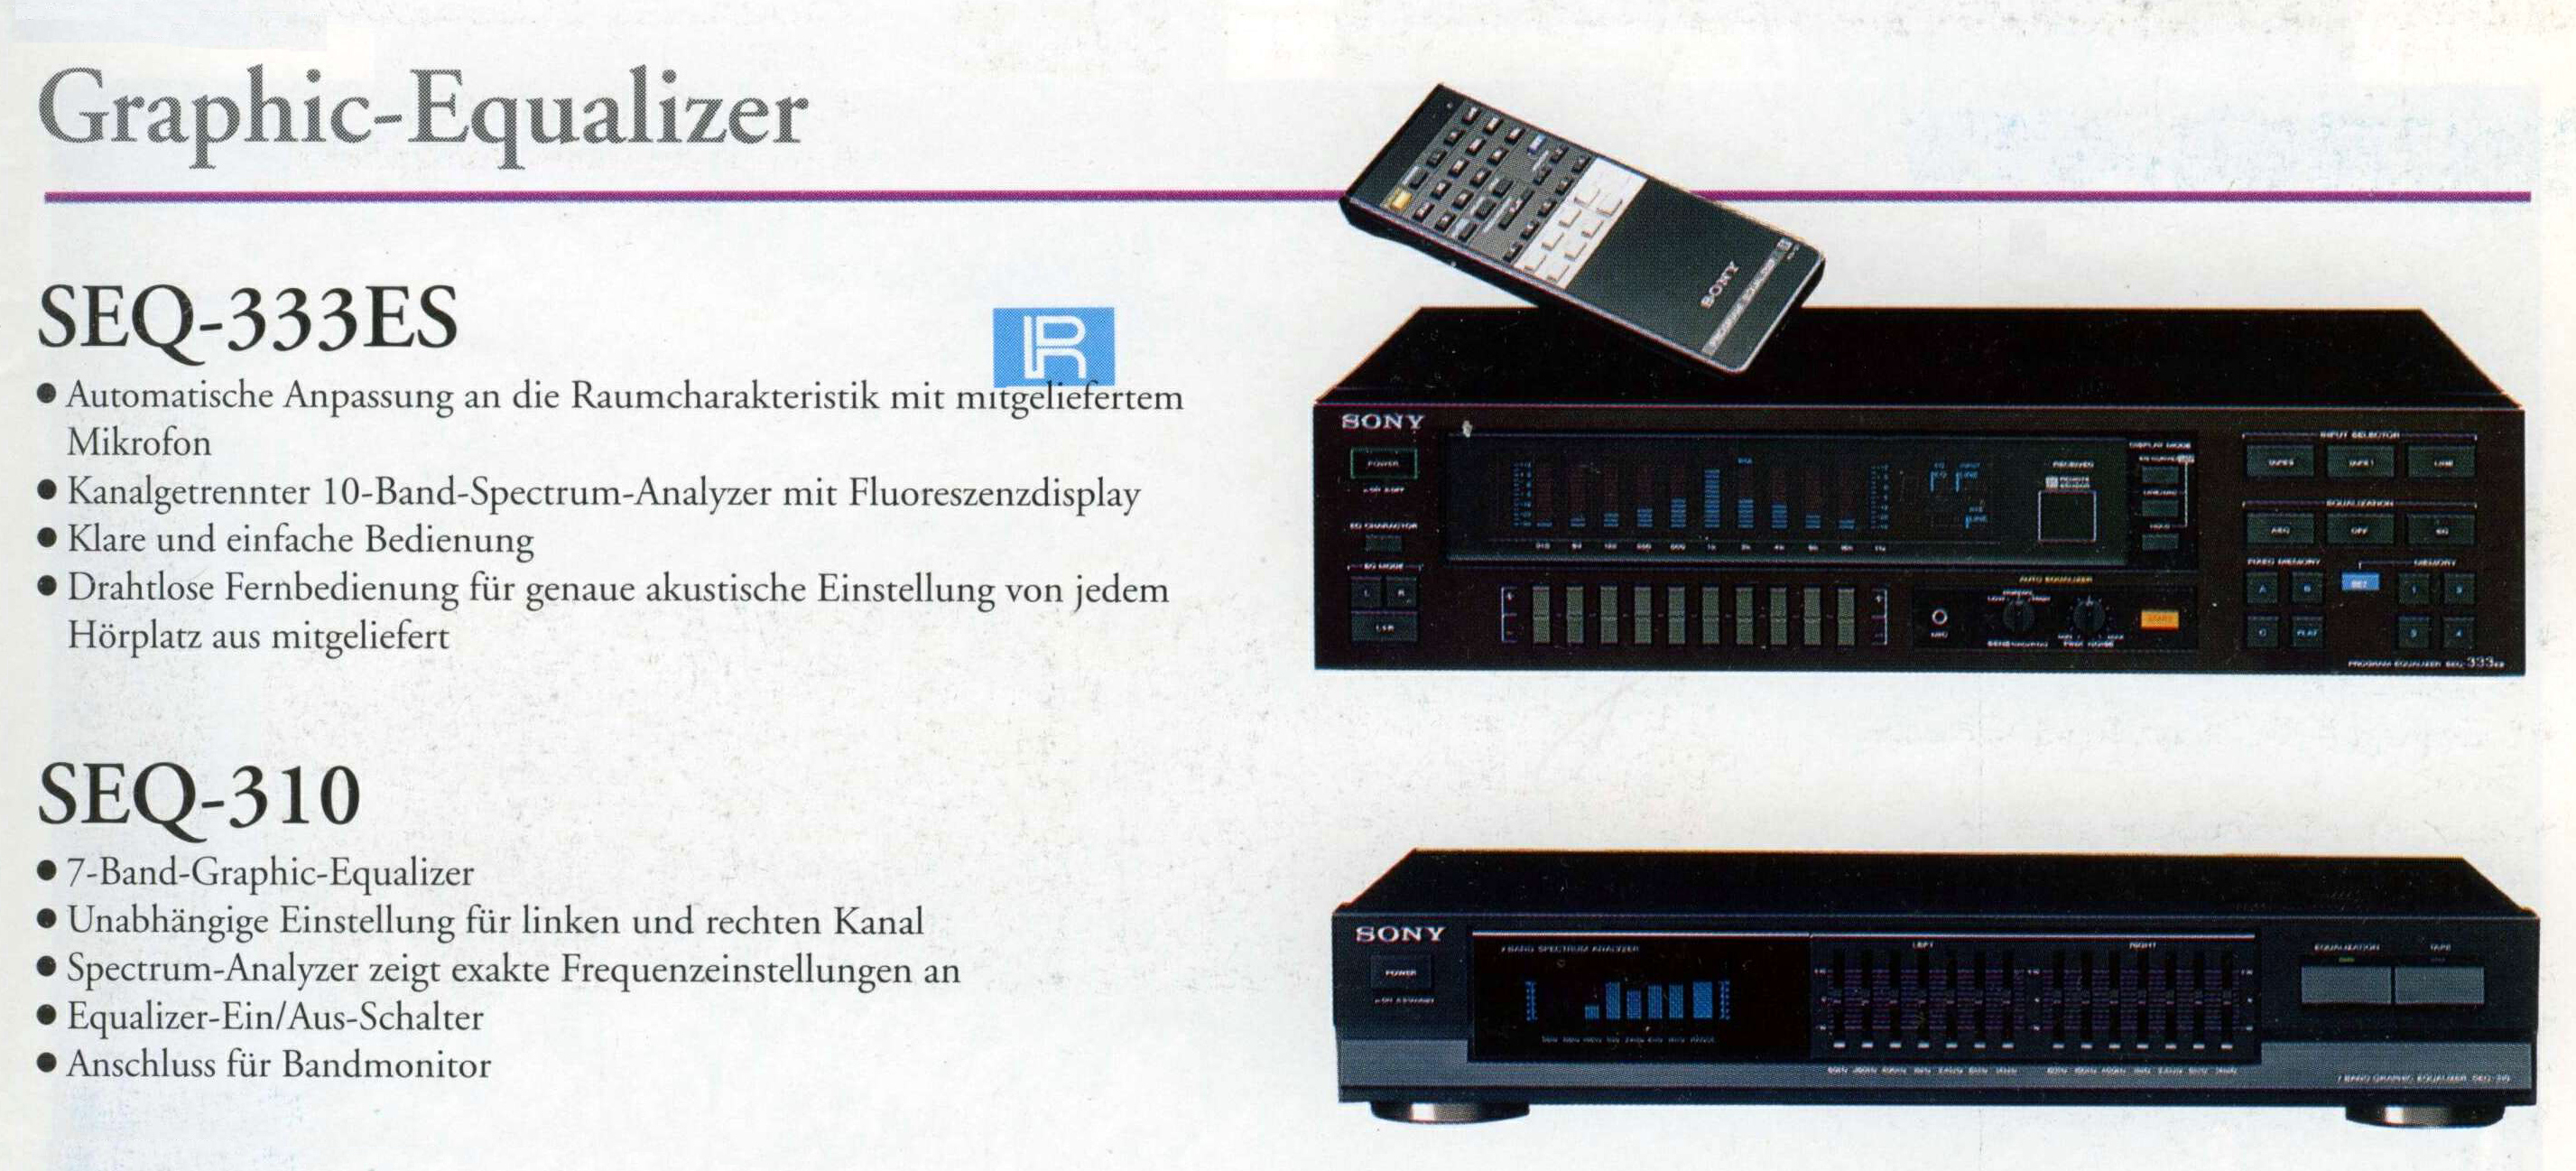 Sony SEQ-310-333 ES-Prospekt-1991.jpg